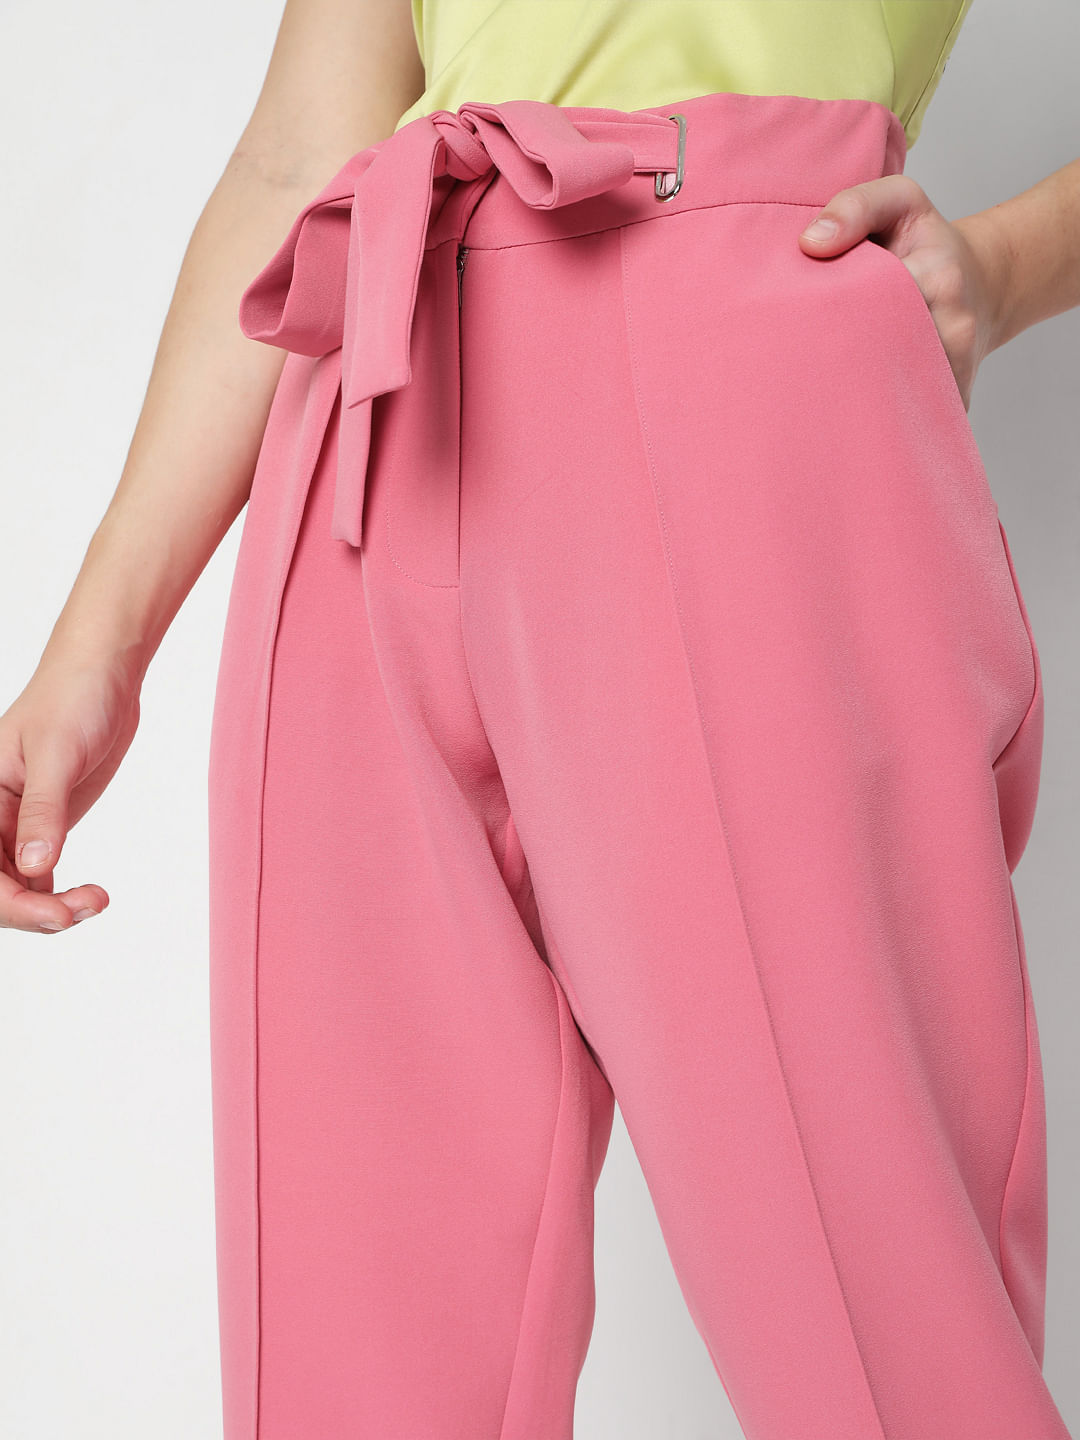 Buy Kate & Oscar Girls Trousers - Pink online